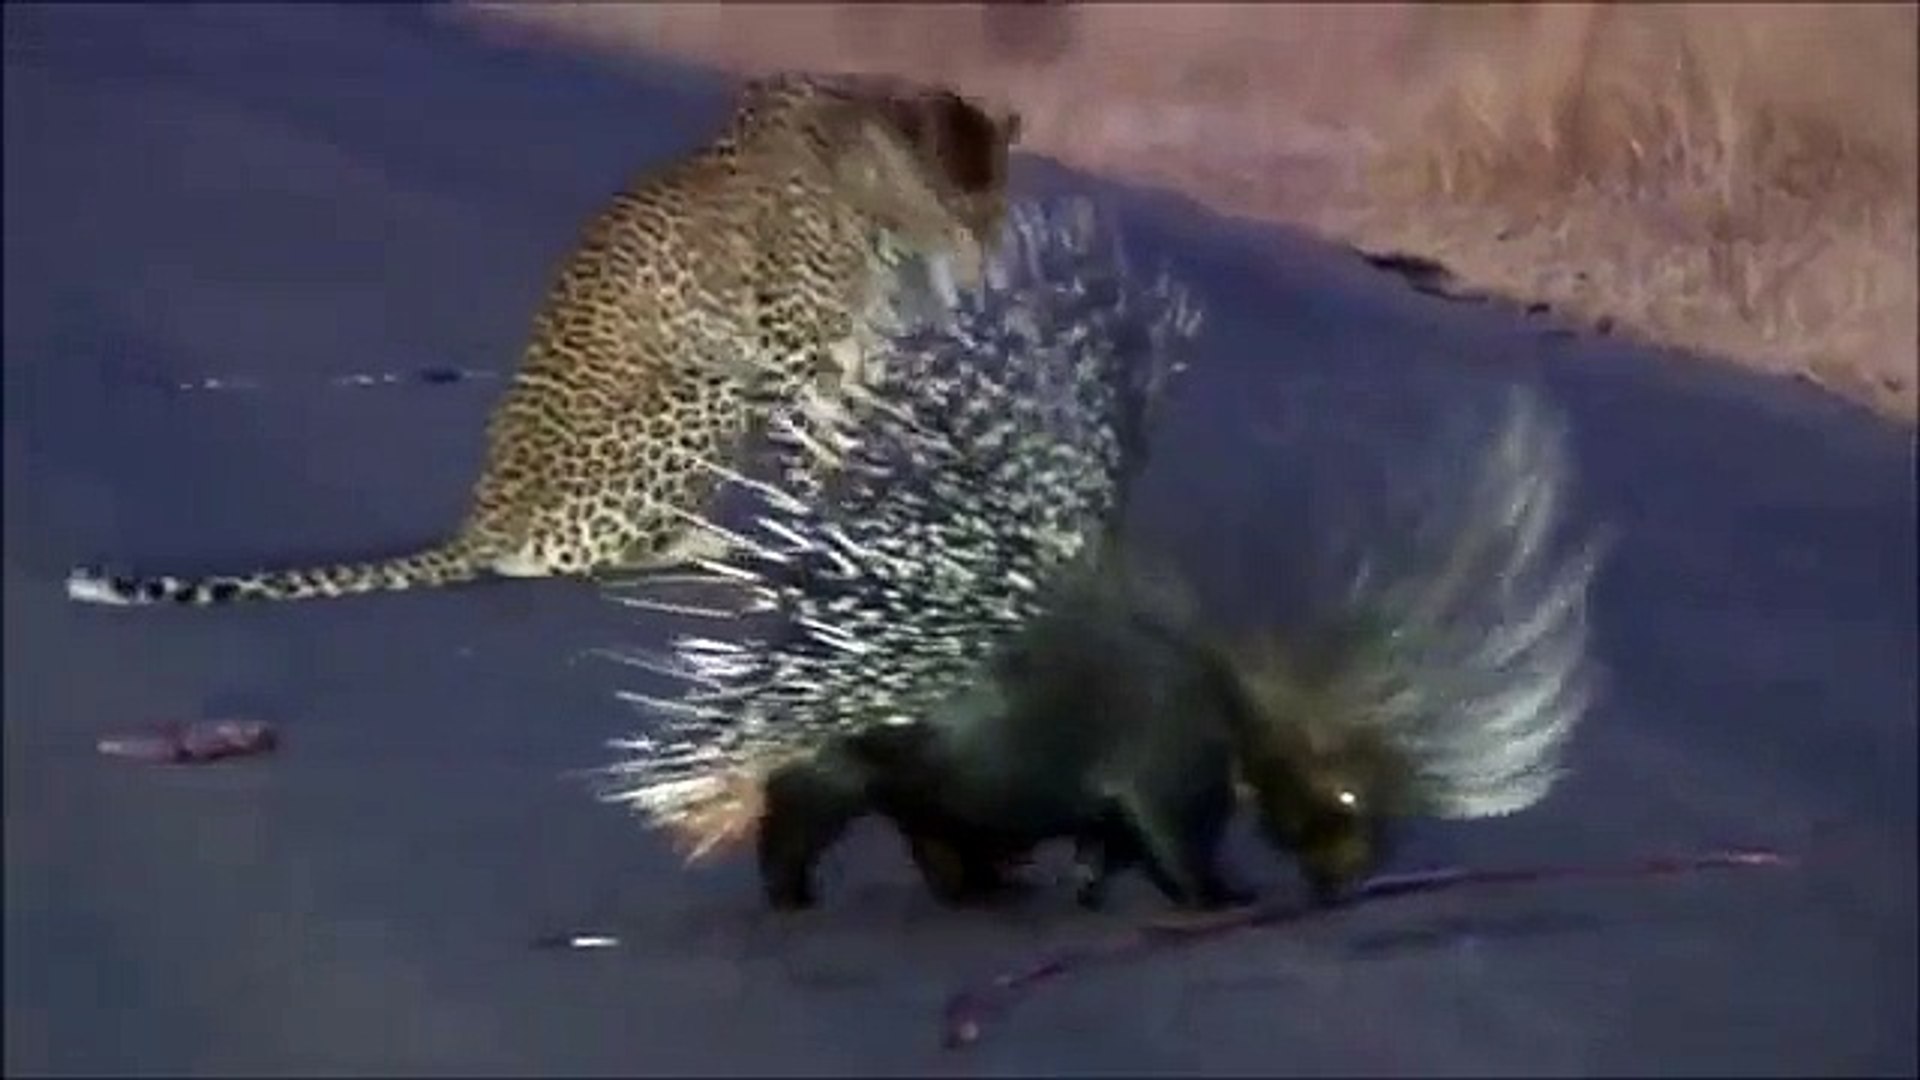 Tiger battles with porcupine in safari park